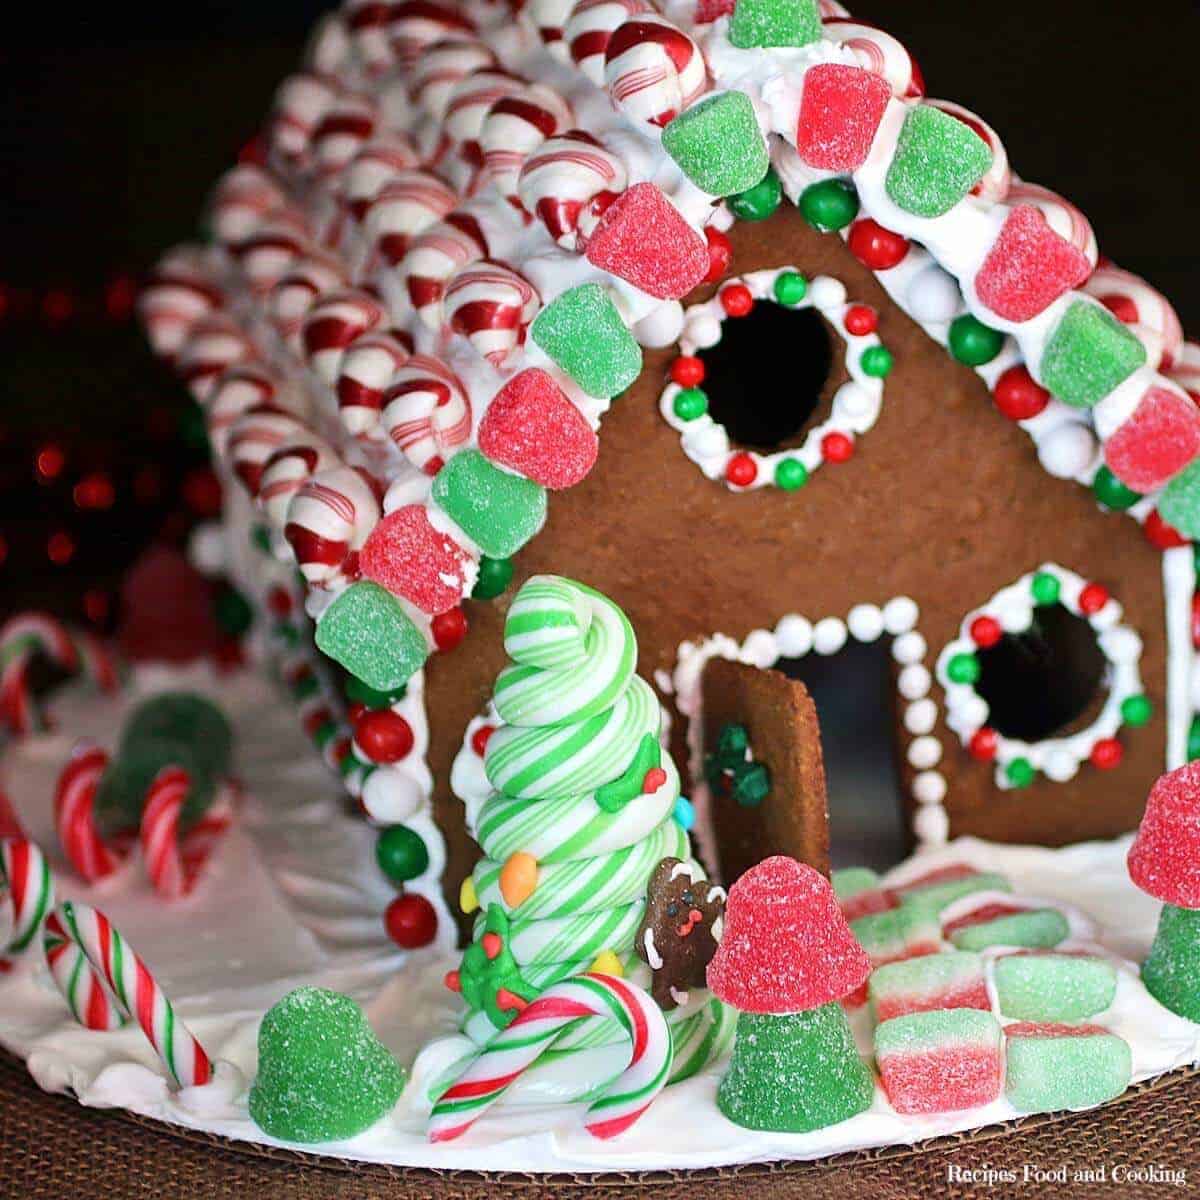 https://princesspinkygirl.com/wp-content/uploads/2015/12/gingerbread-house-1f.jpg